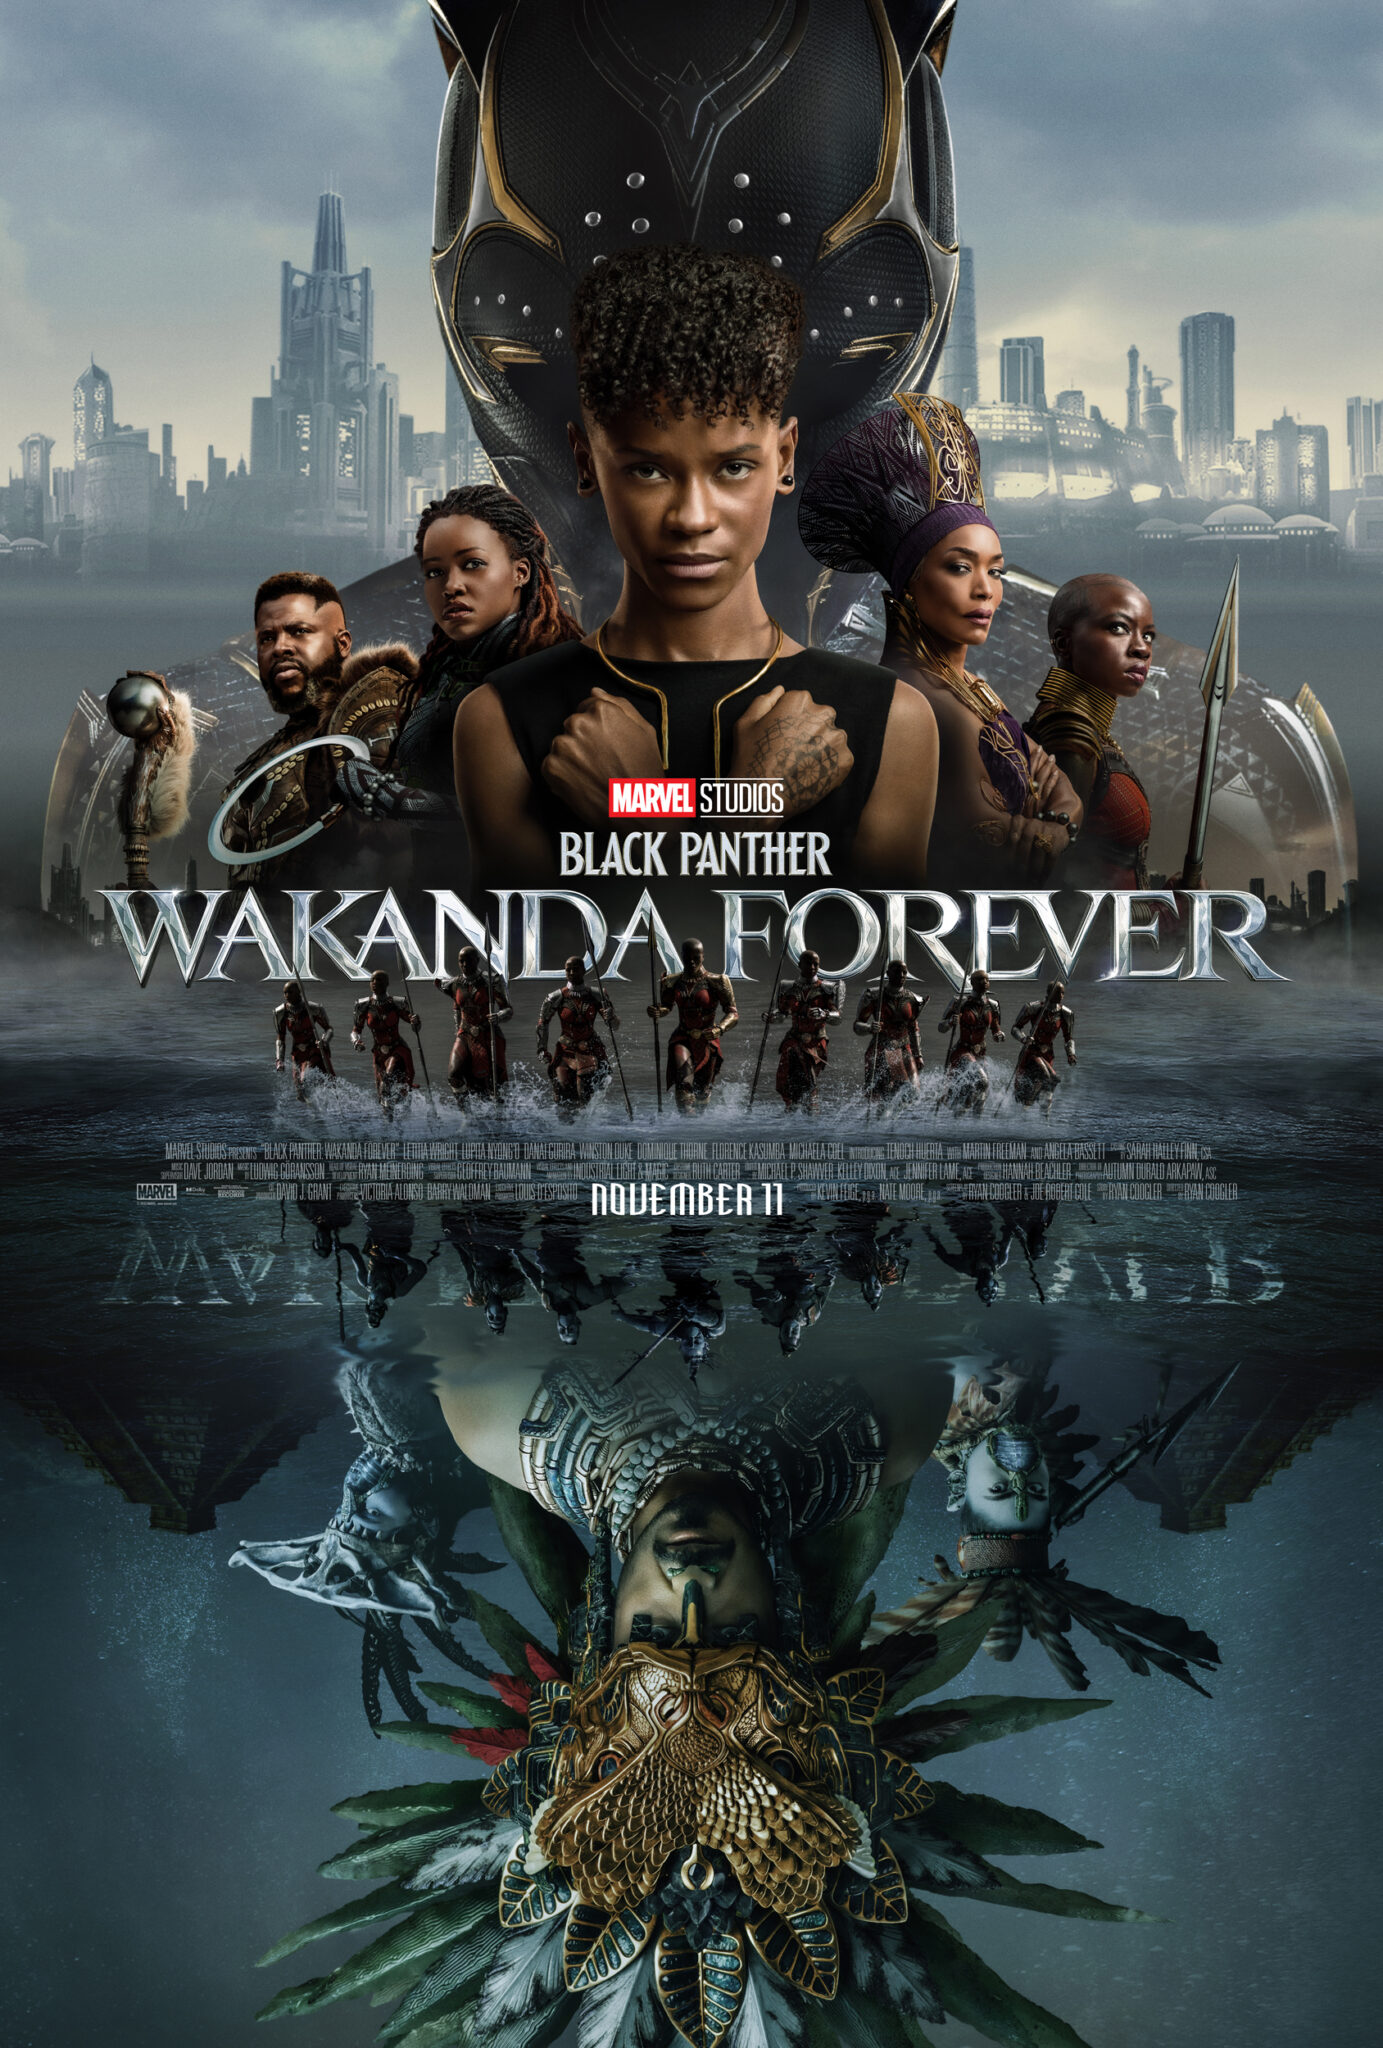 Marvel Studios’ Black Panther: Wakanda Forever